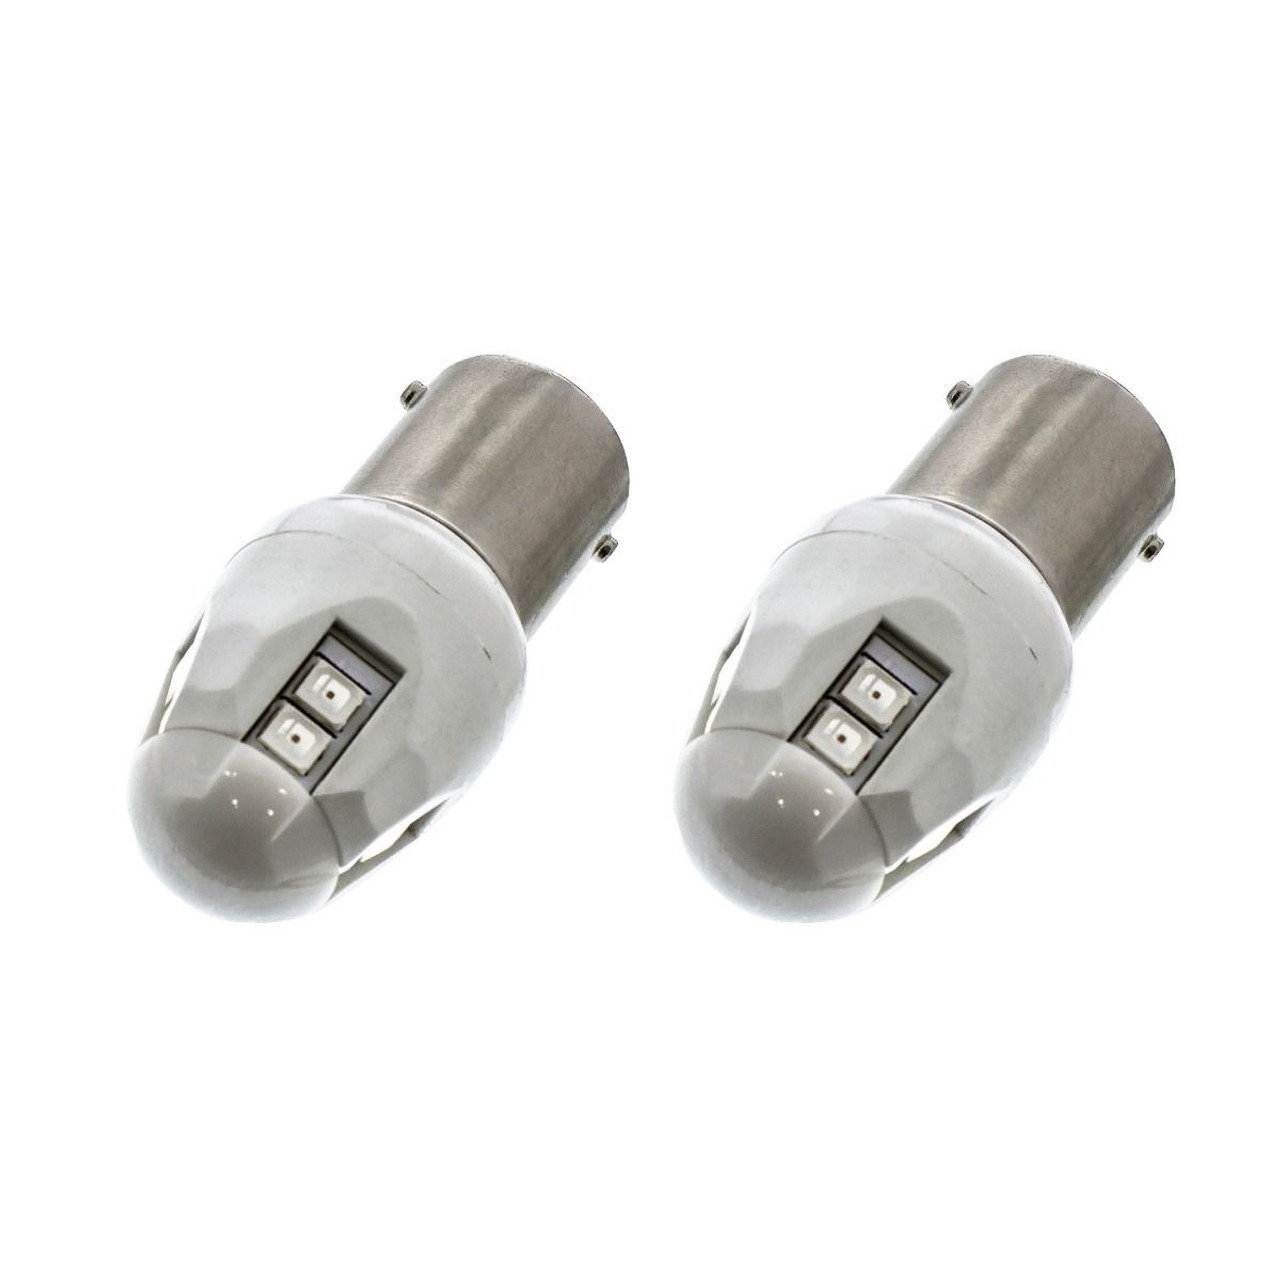 United Pacific High Power 8 LED 1156 Bulb - Amber